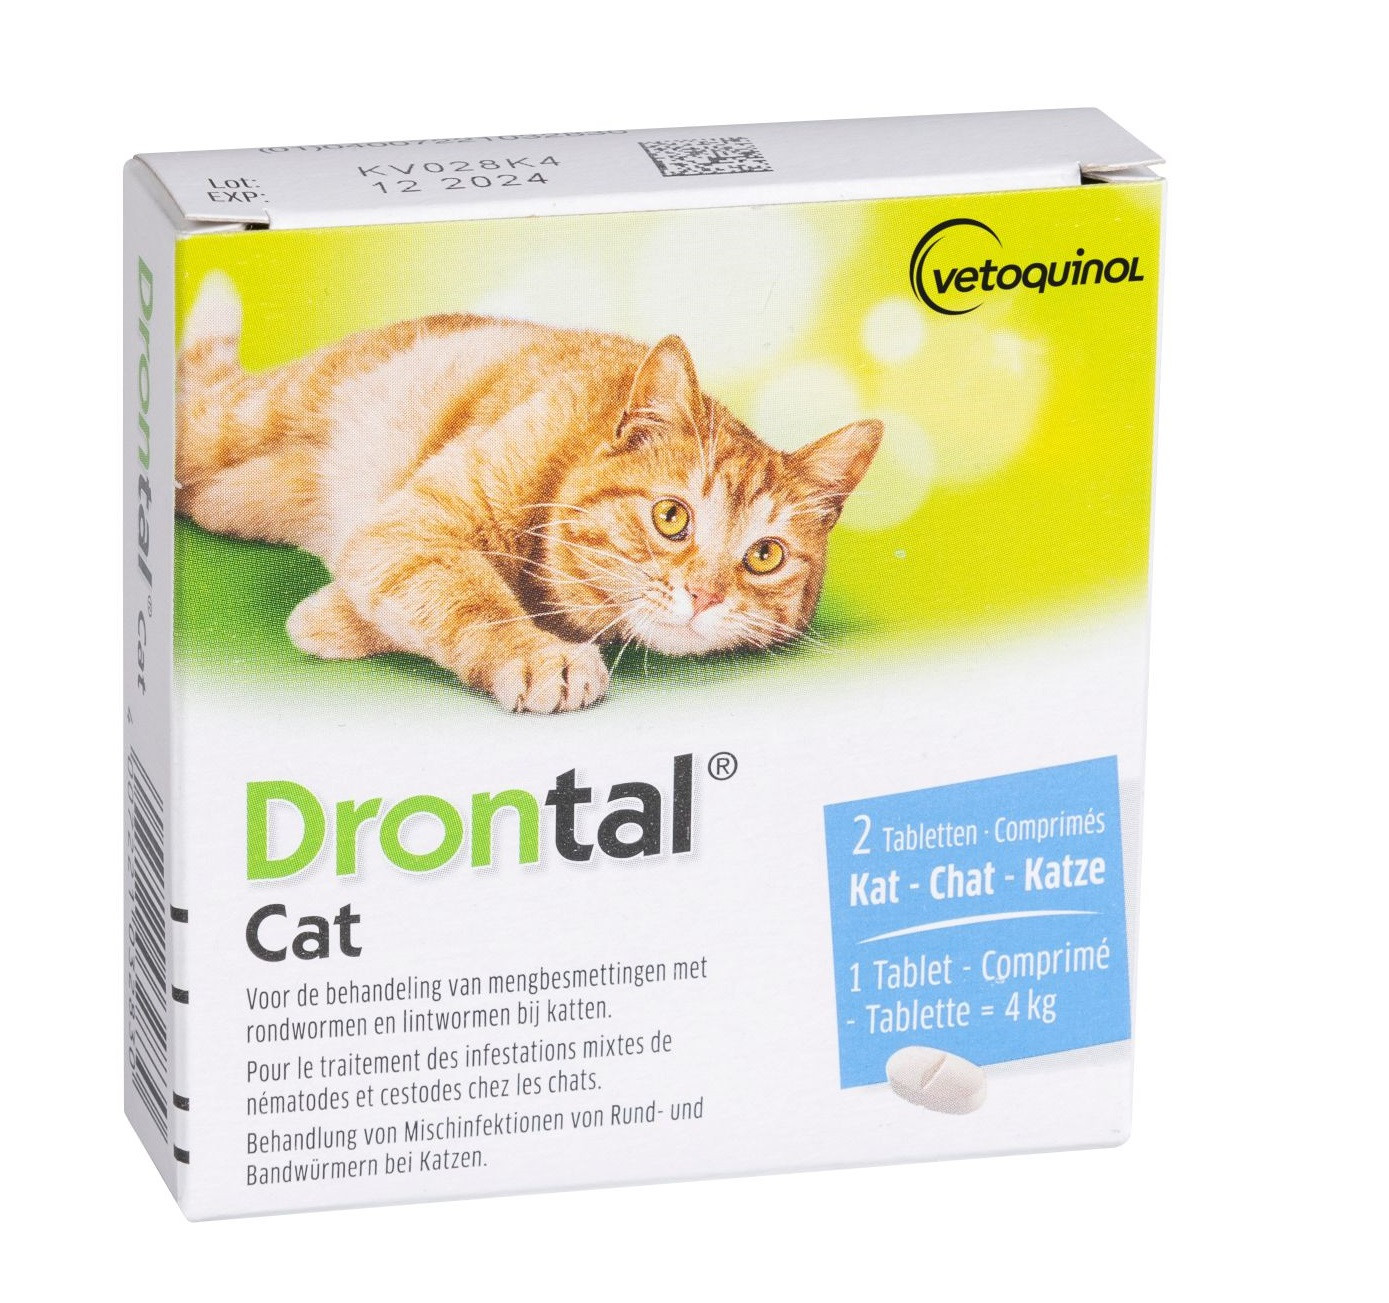 Drontal Cat Ontwormingsmiddel